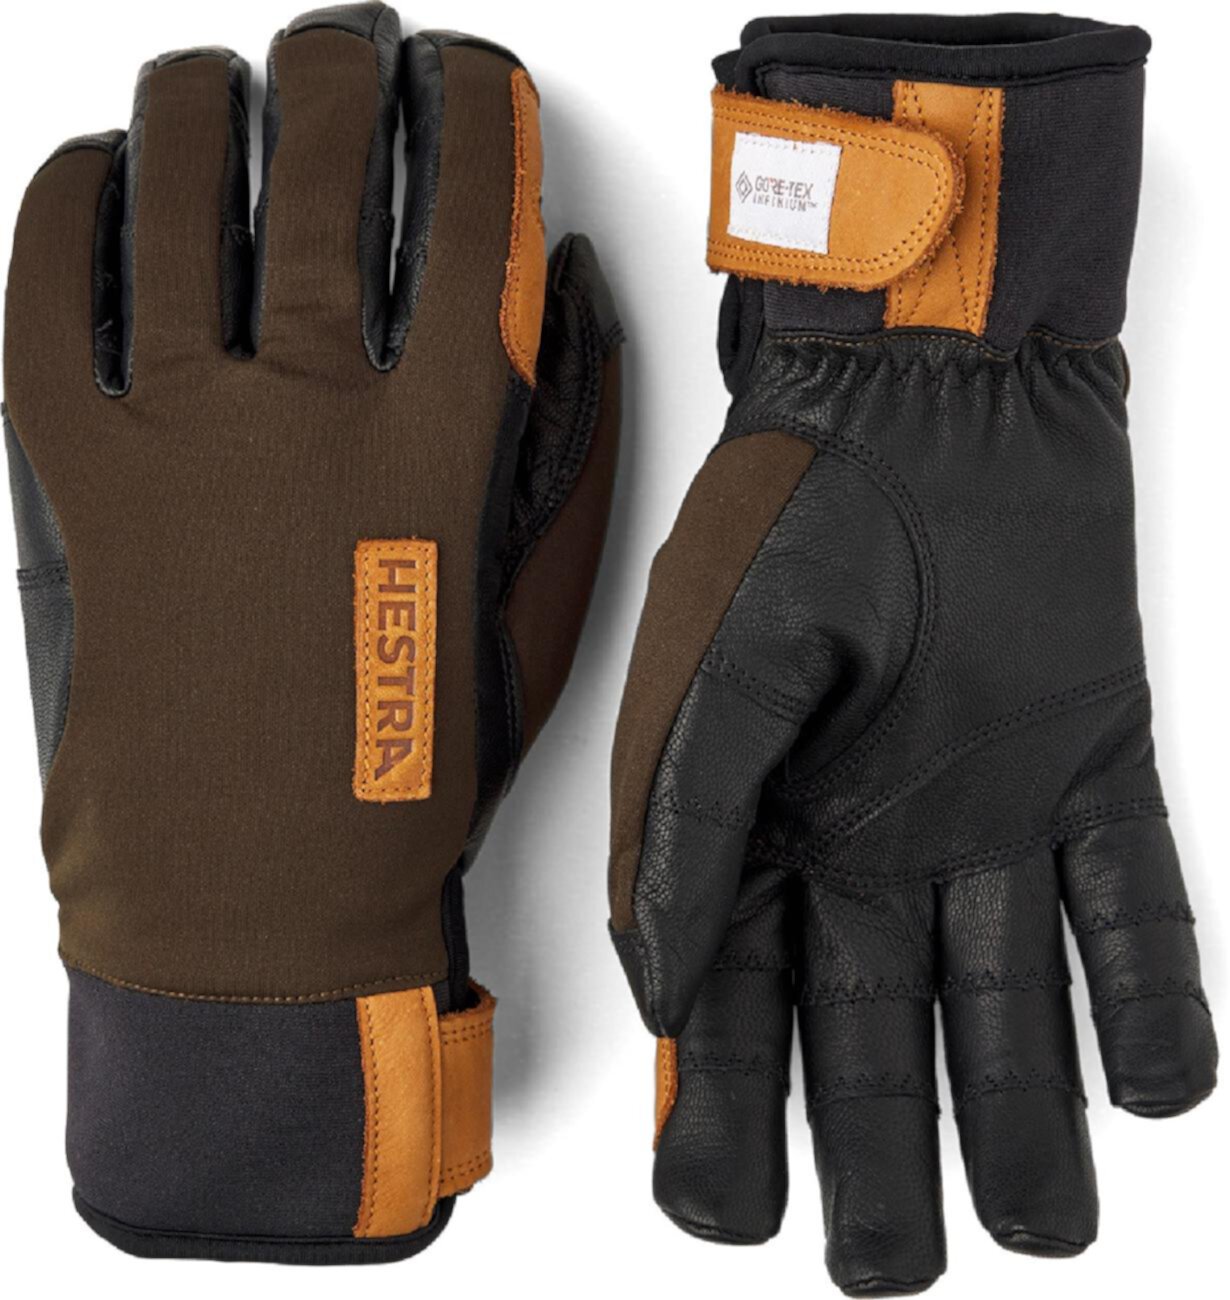 Махровые перчатки Ergo Grip Active Wool Hestra Gloves